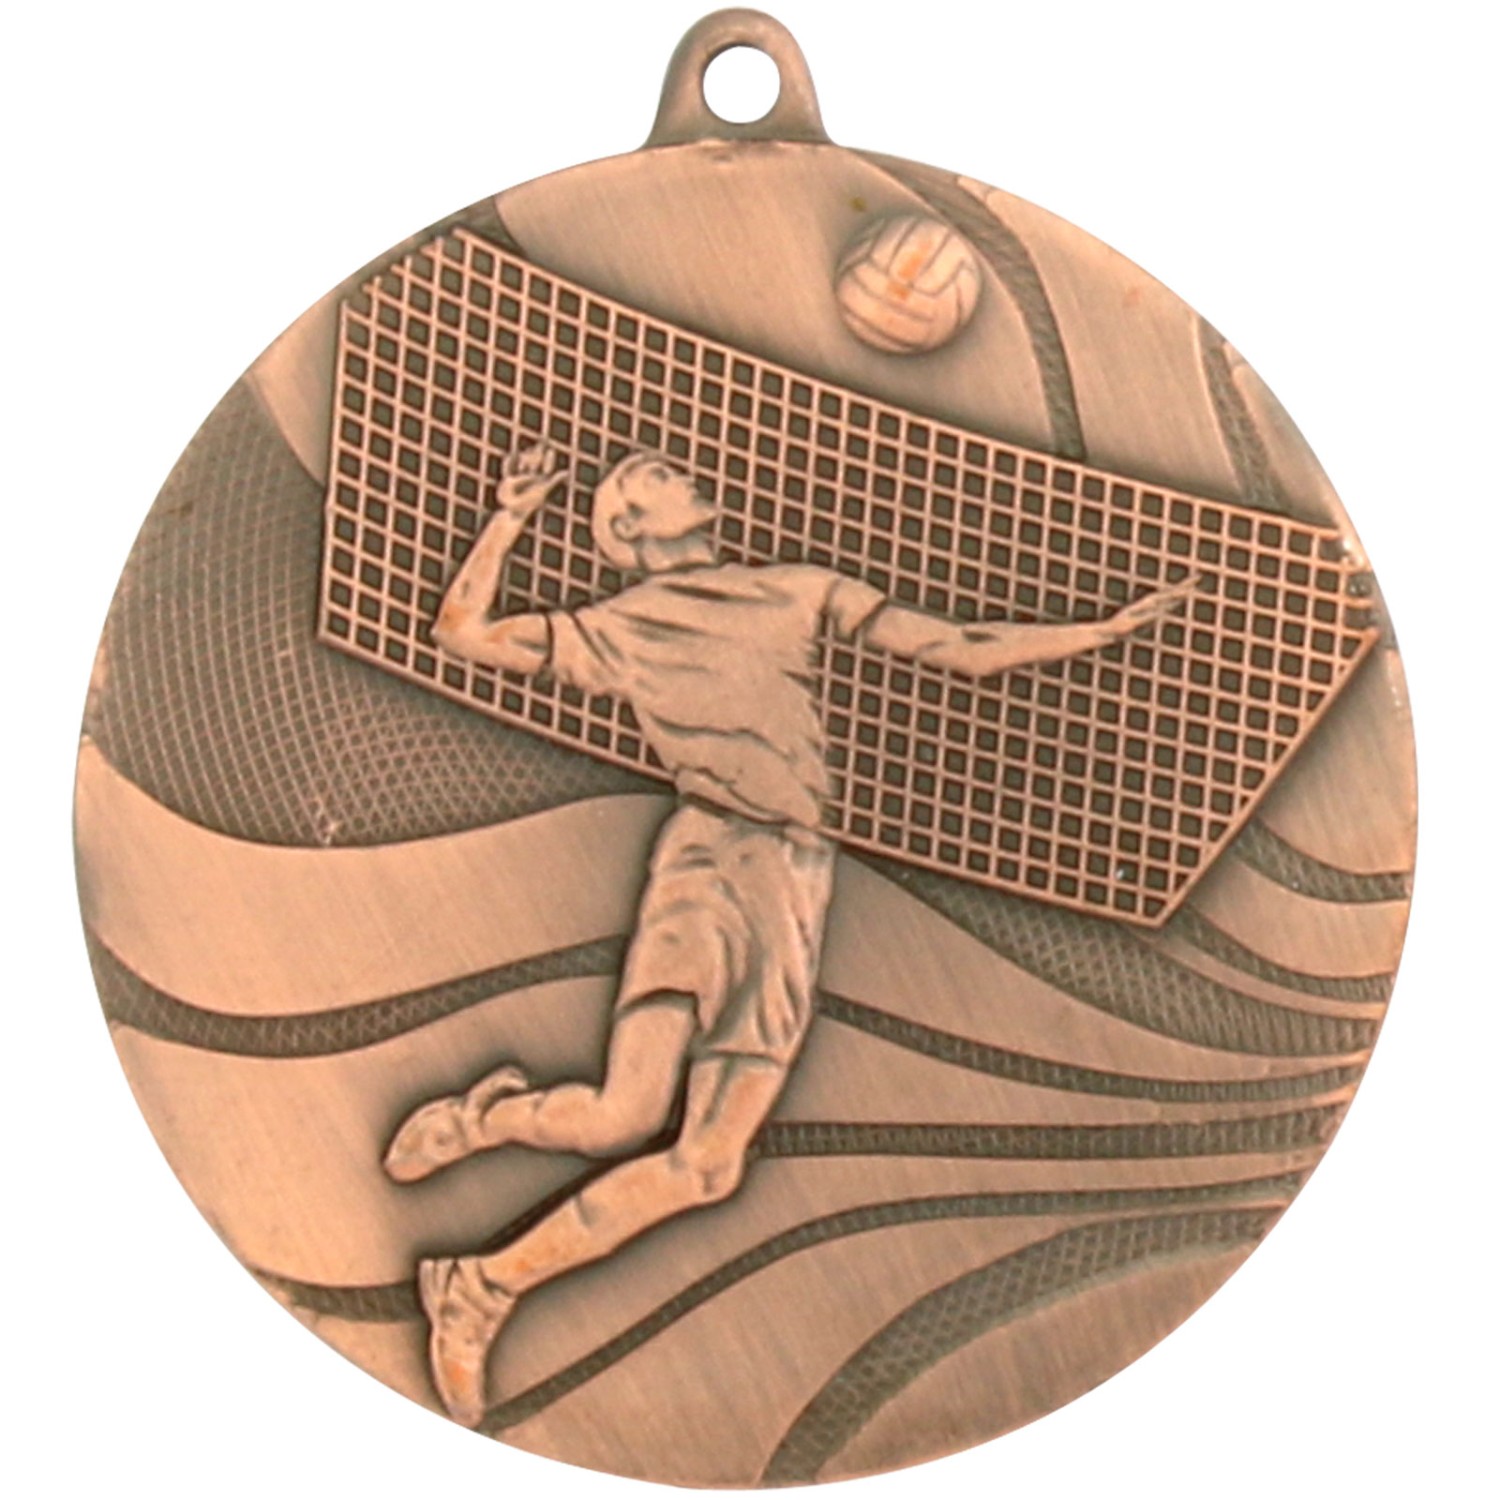 3. Foto Medaille Volleyball gold silber bronze 50 mm Stahl (Sorte: Set je 1x gold / silber / bronze)